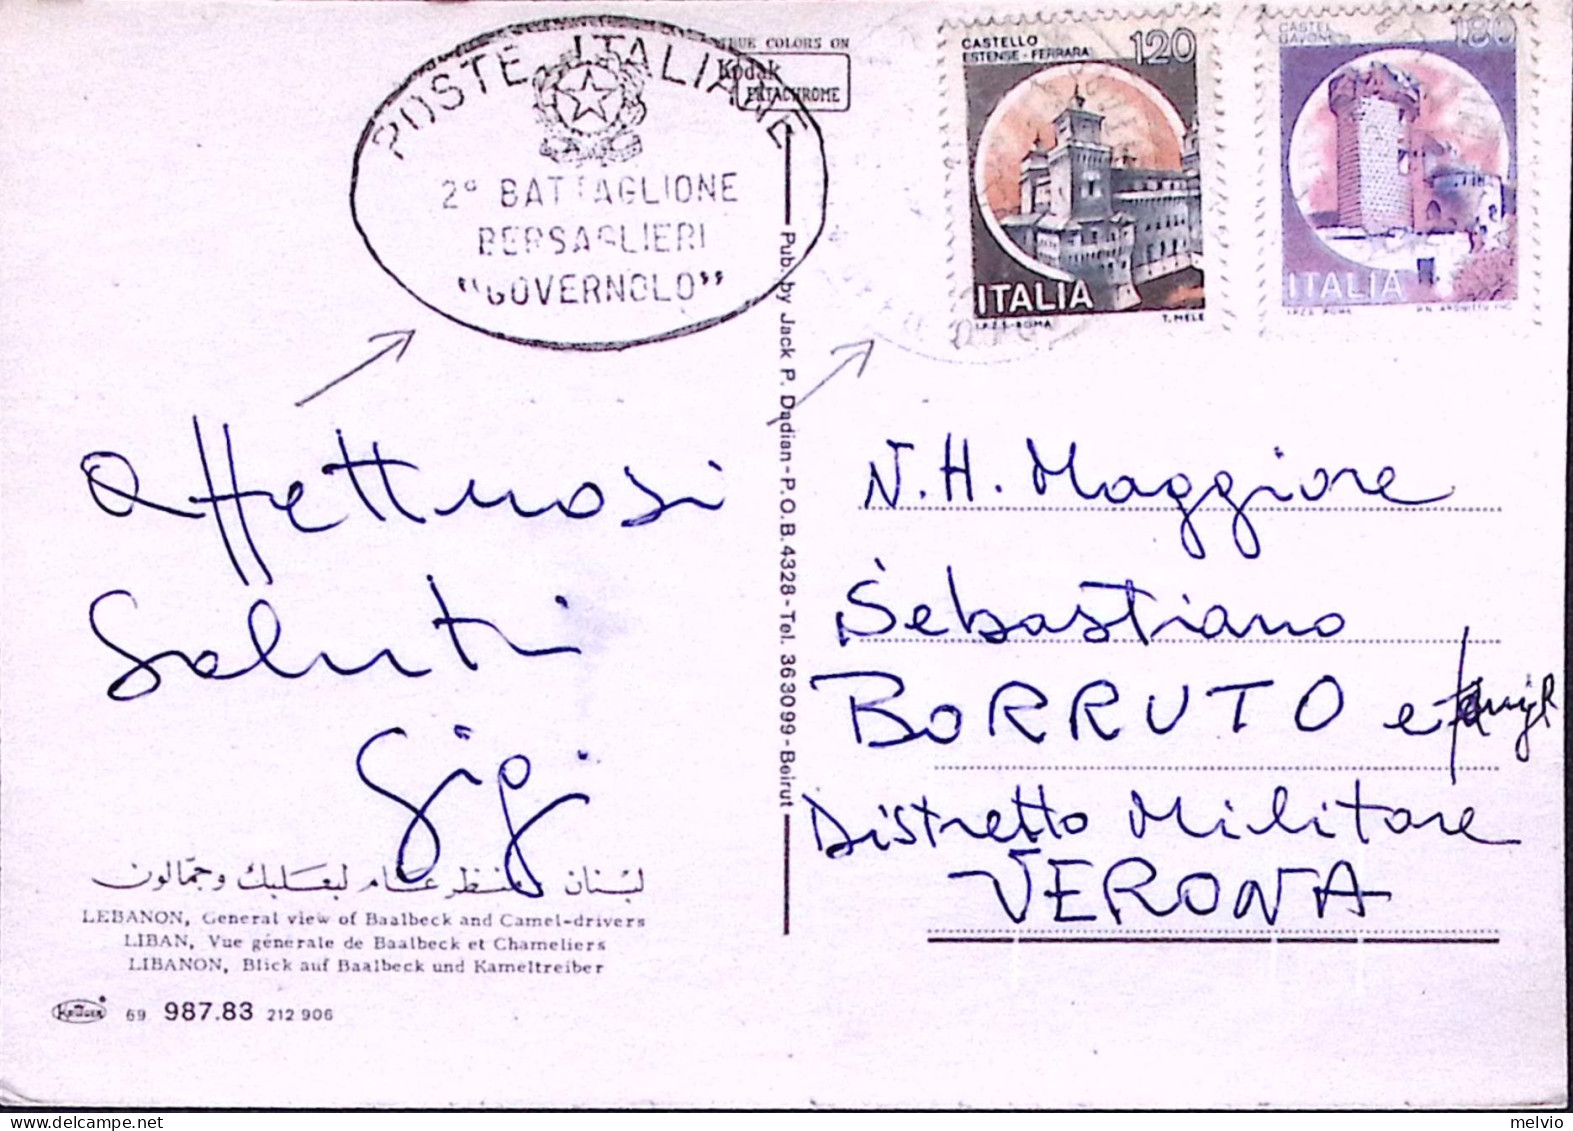 1983-POSTE ITALIANE-2 BATTAGLIONE BERSAGLIERI /GOVERNOLO/ Ovale Su Cartolina Via - Other Wars